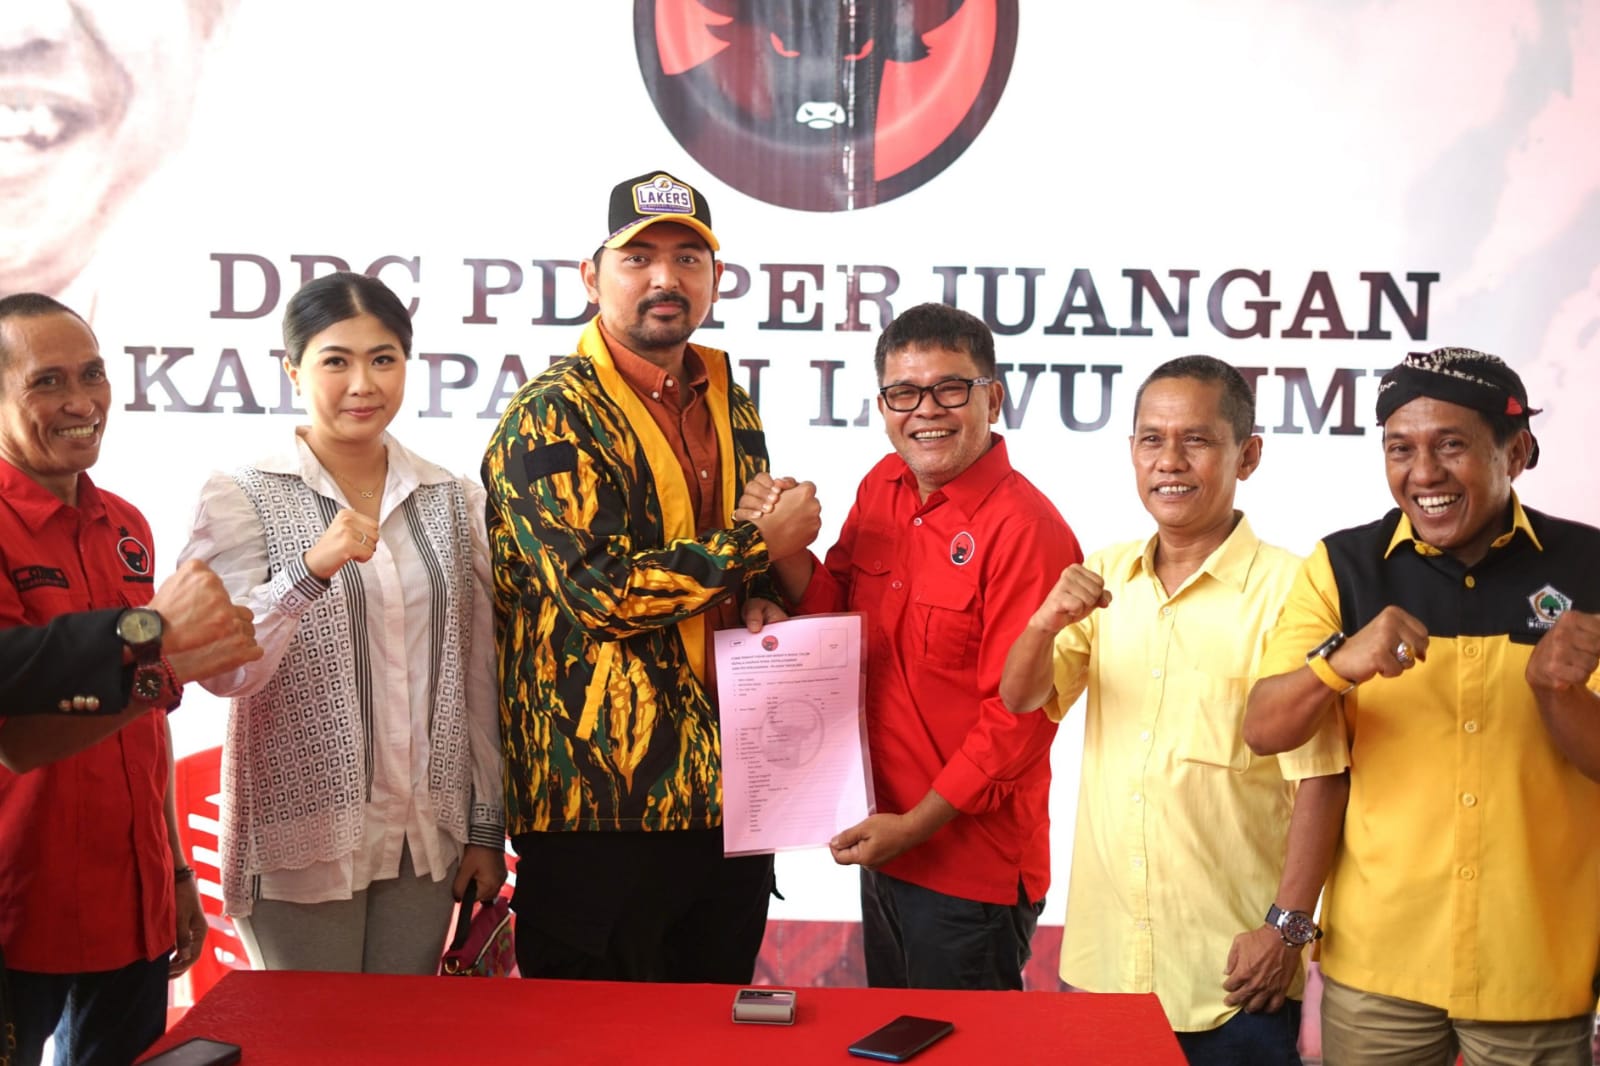 DPP Golkar Dorong Akbar Cabup Lutim, Tapi juga Mendaftar di PDI-P Sebagai Cawabup